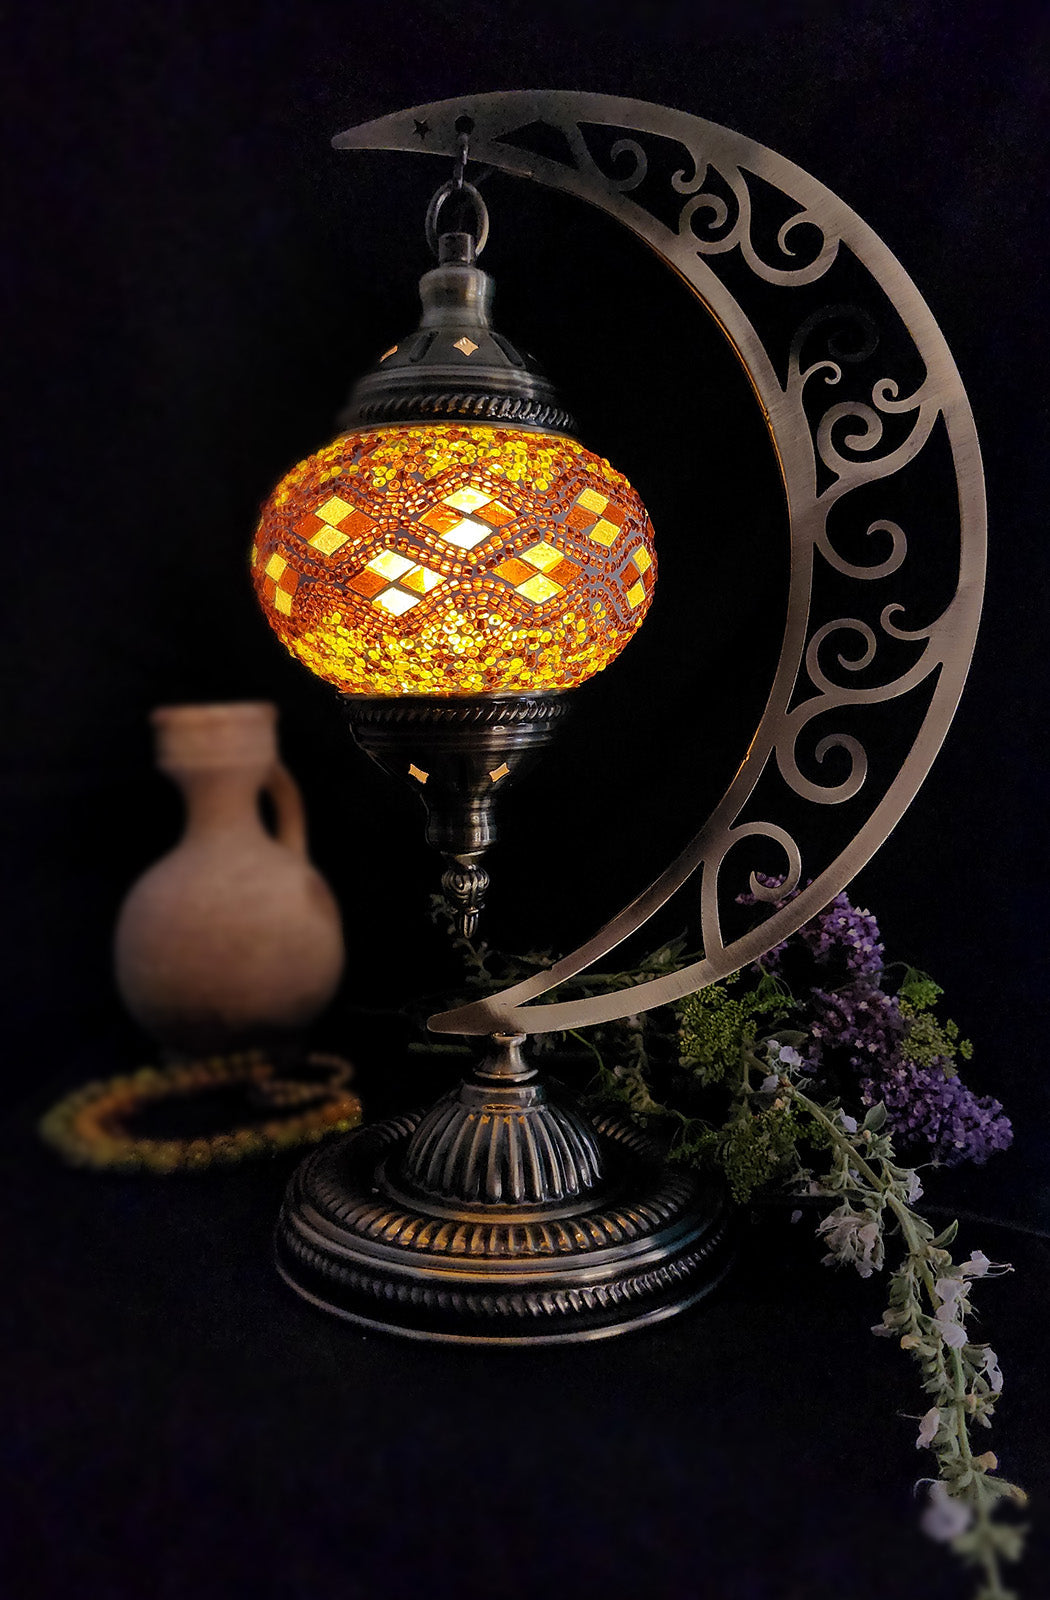 Turkish Mosaic Lamp - Amber Diamond Crystal